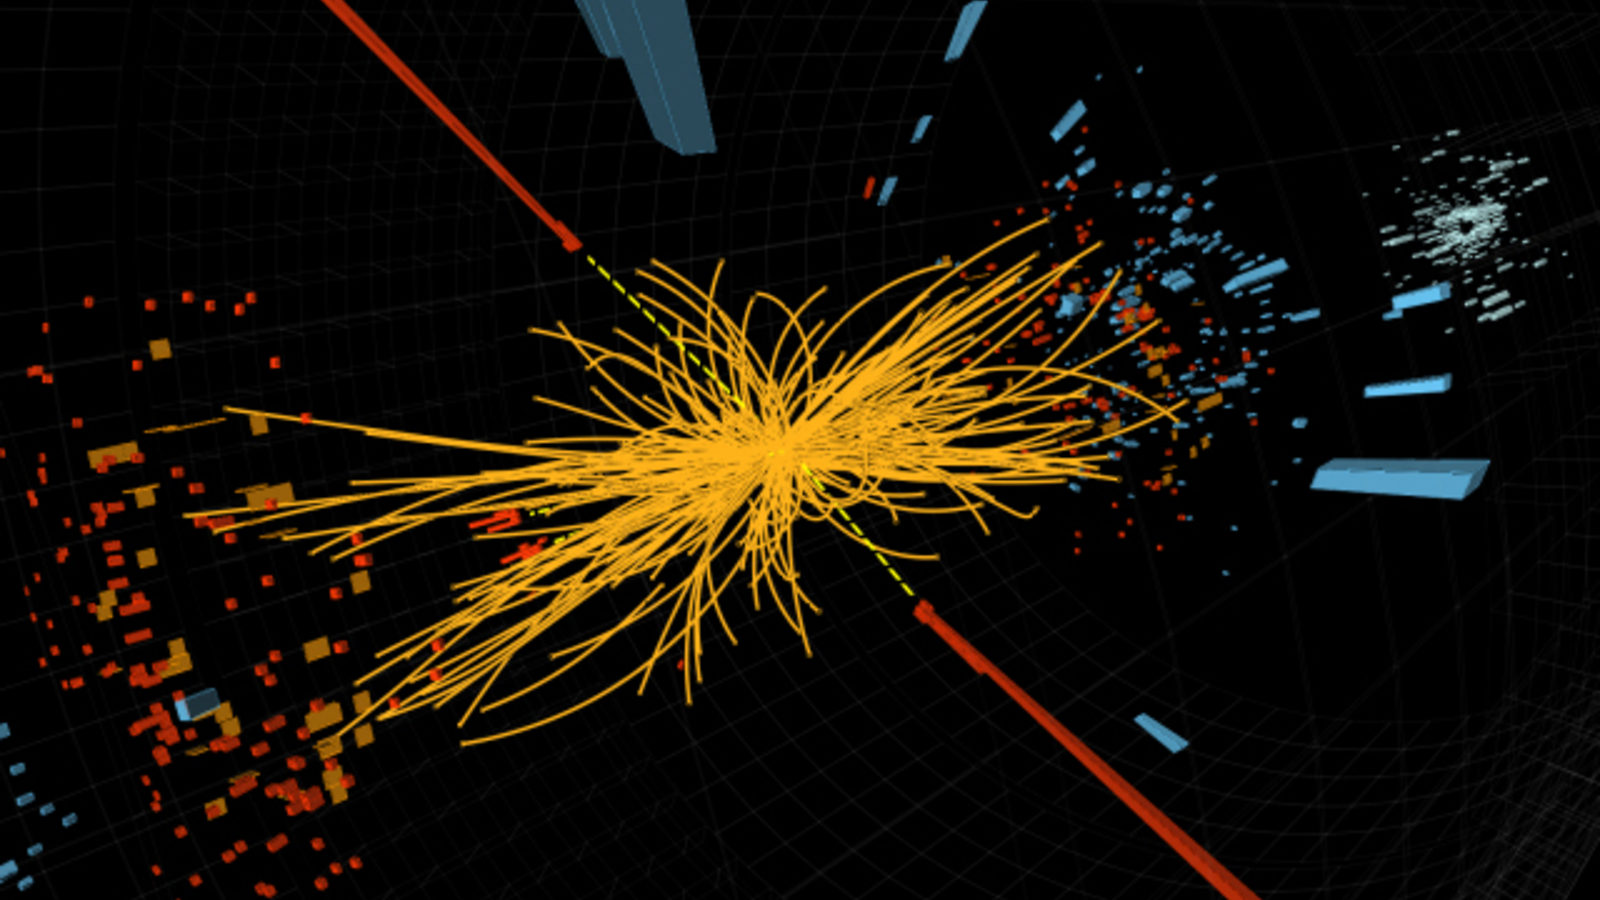 higgs boson